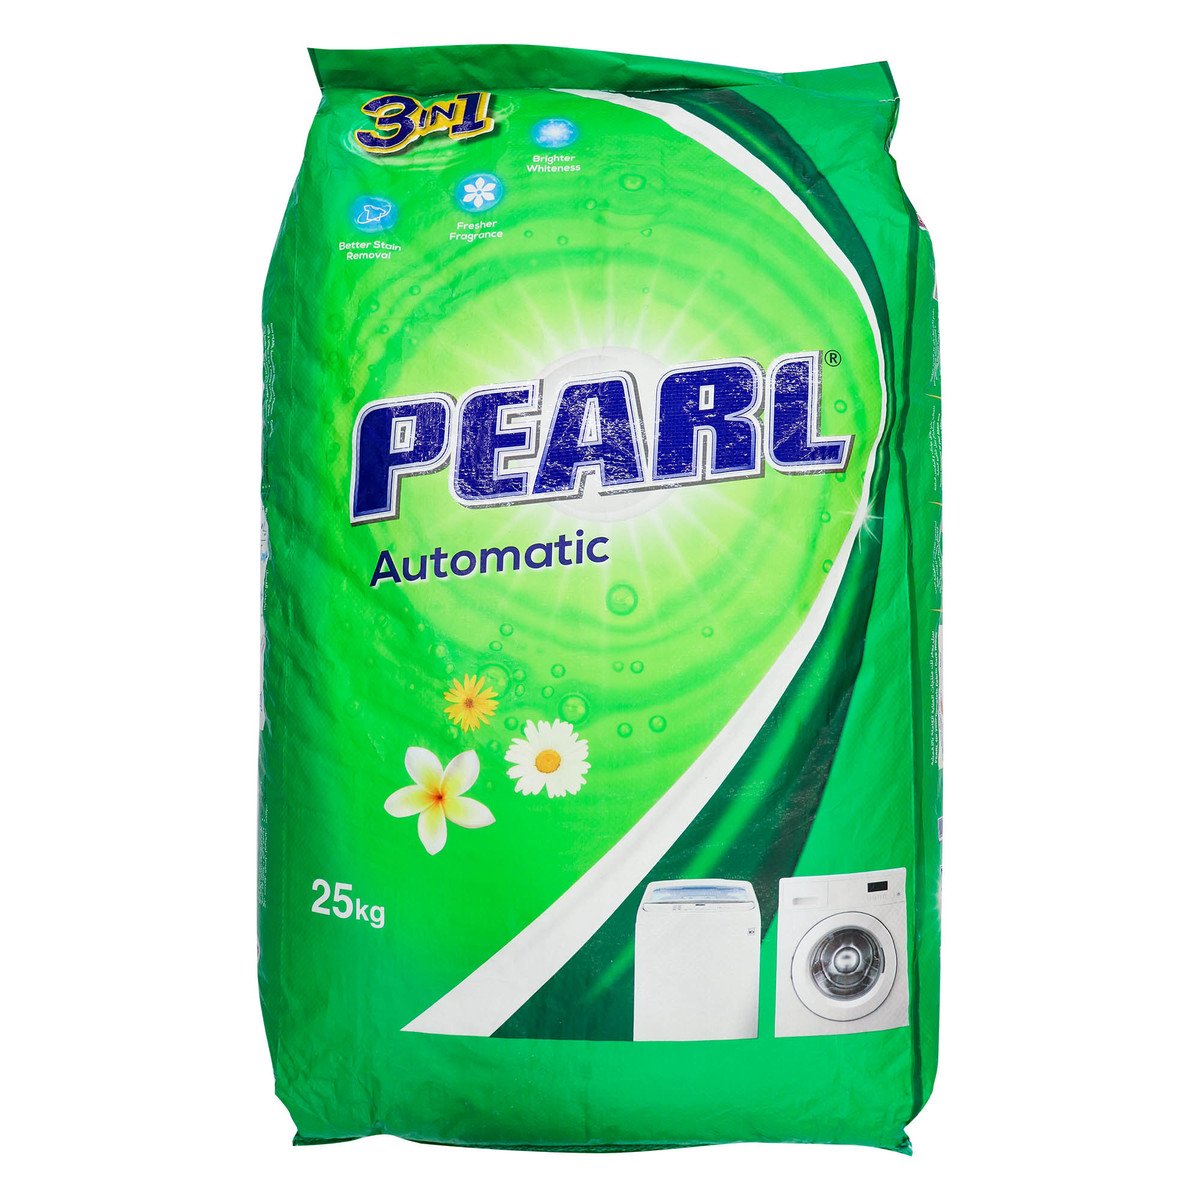 Pearl Automatic Washing Powder 25kg